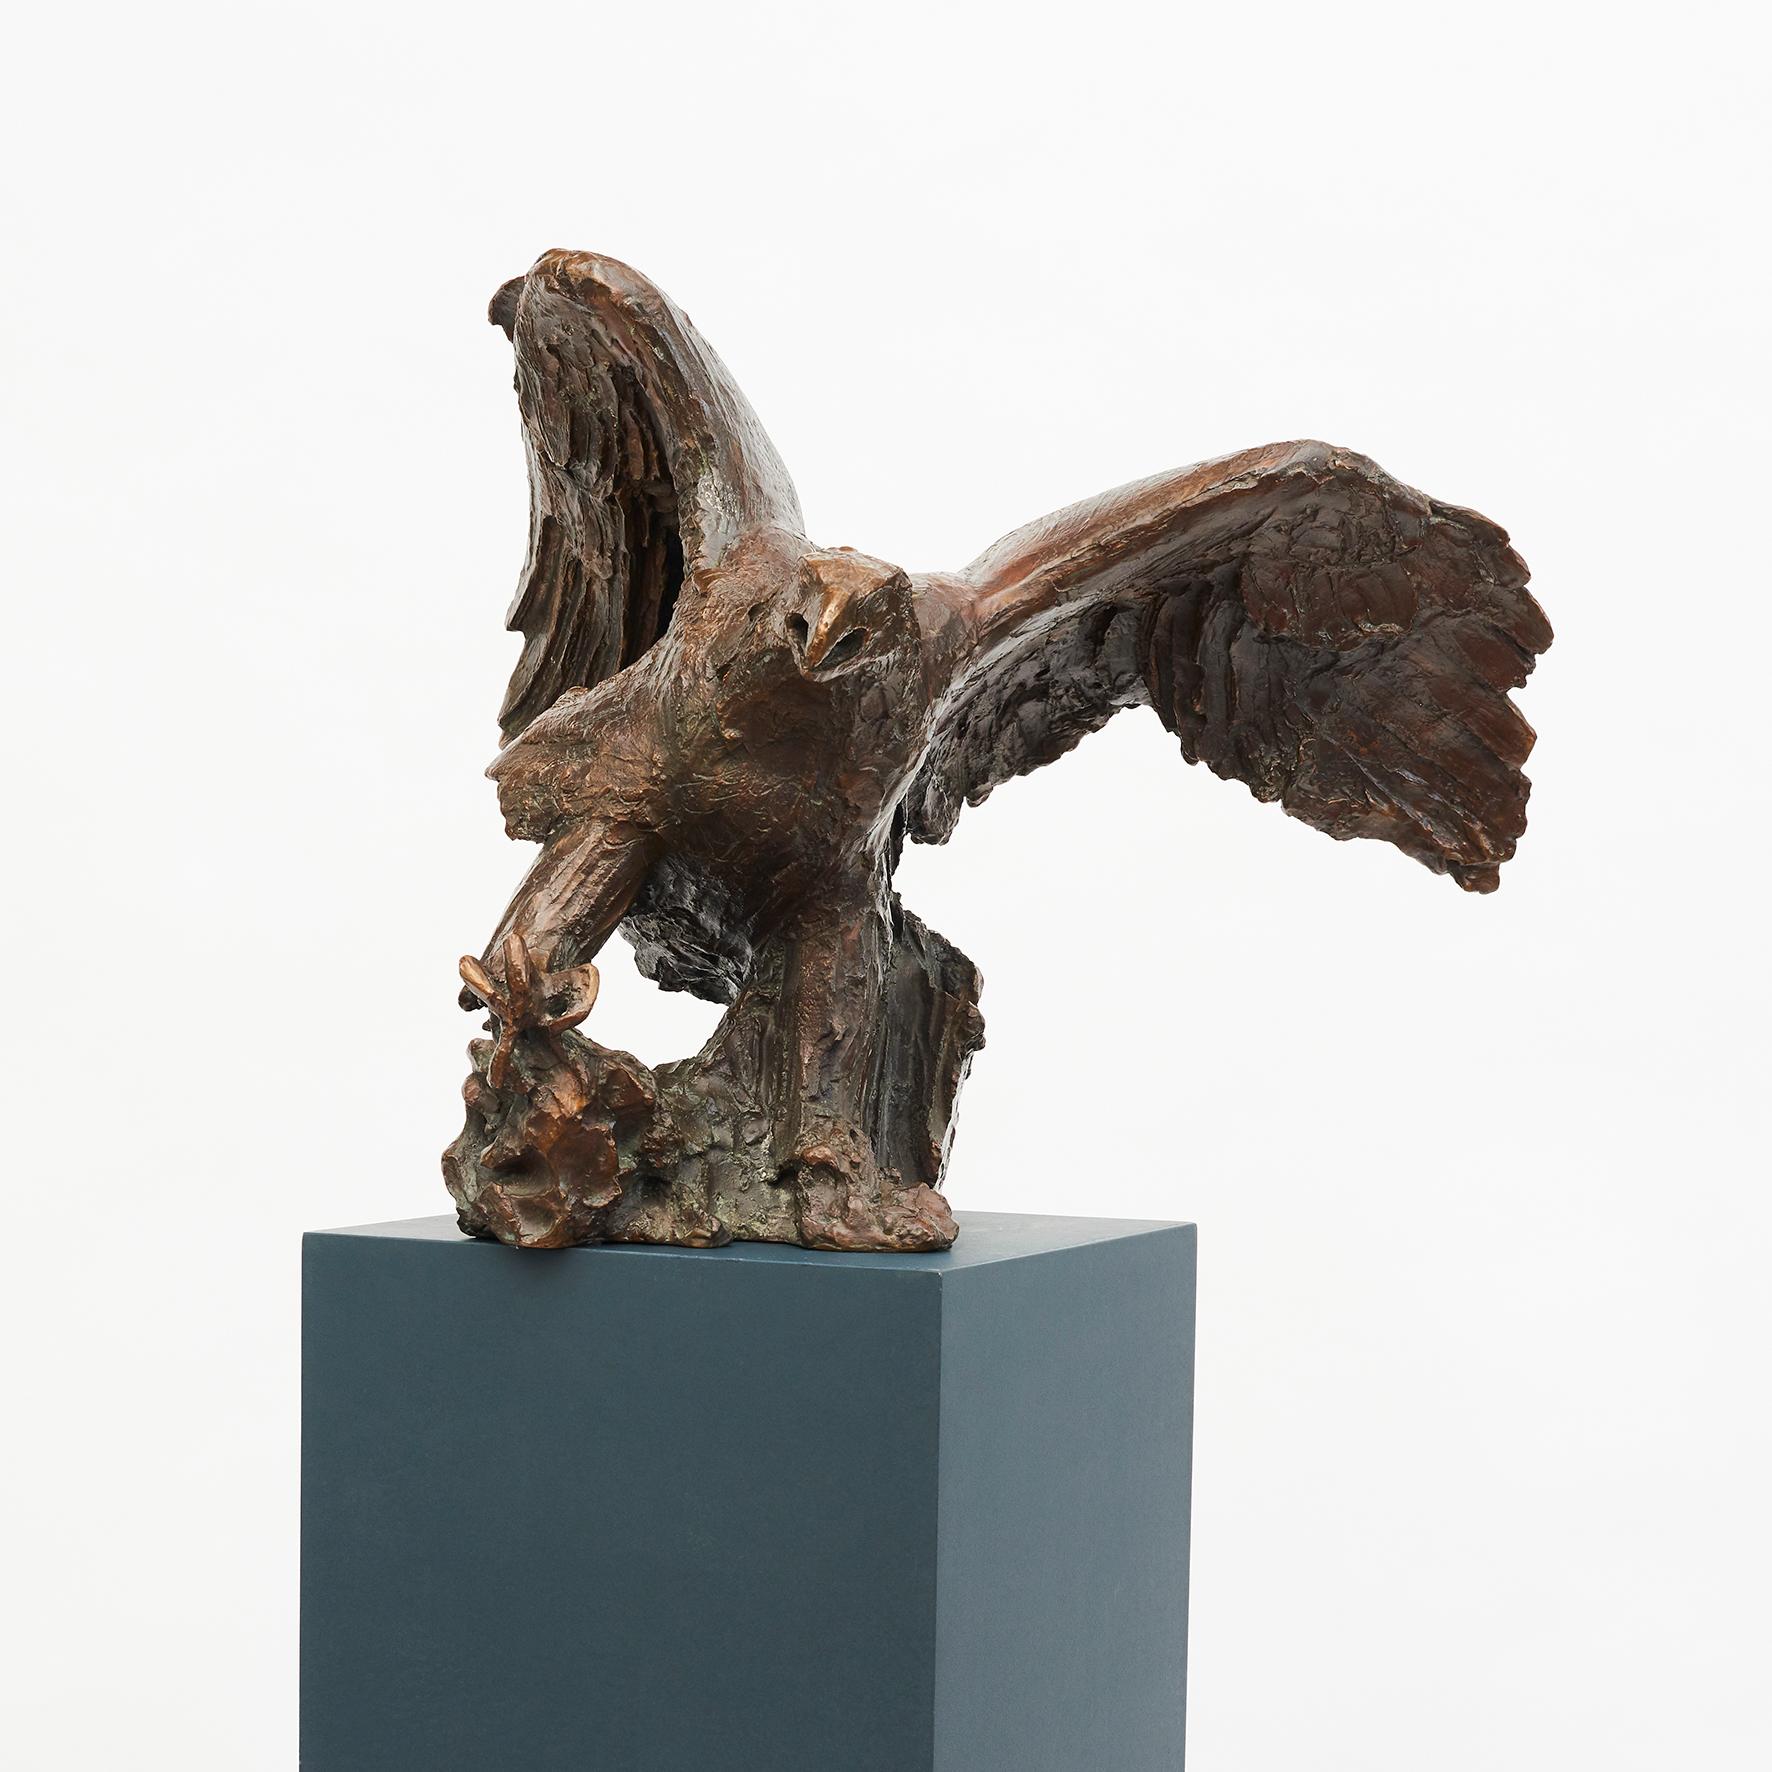 Large eagle bronze sculpture by Mogens Bøggild, Denmark, 1930-1950.
Dark patinated bronze. Signed with monogram 'MB'.

Mogens Kruse Bøggild (11 June 1901 – 25 April 1987) was a Danish sculptor.
He specialized in figures of animals. Professor of